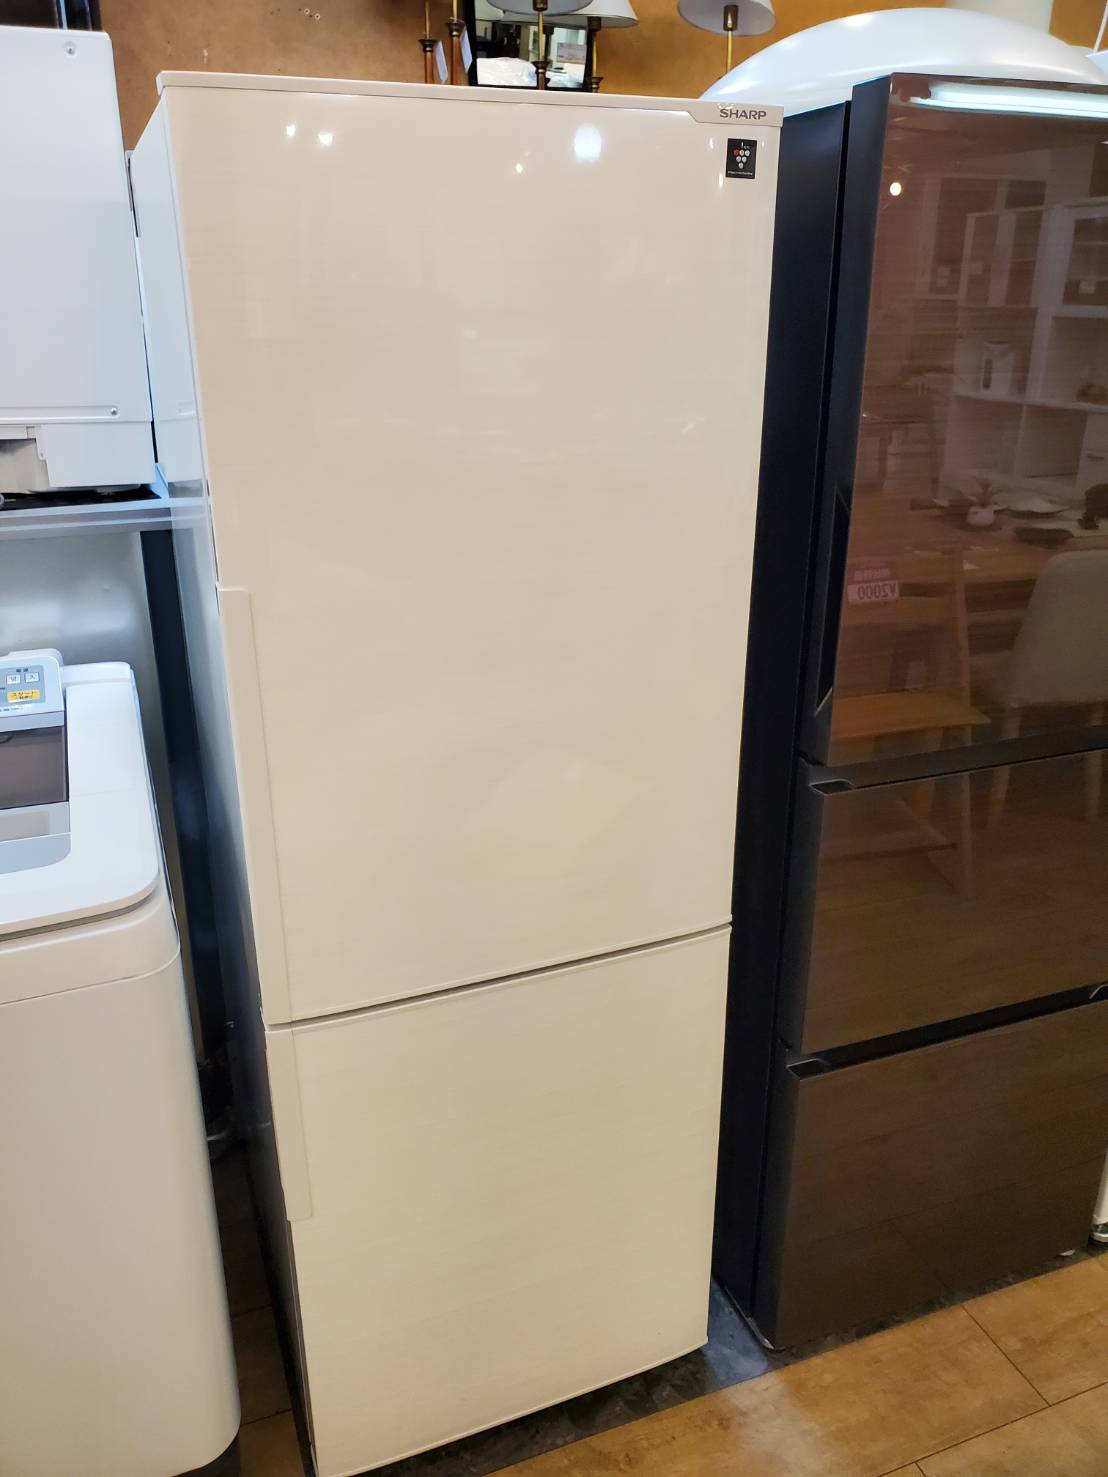 ☆SHARP シャープ 271L 2ドア冷蔵庫 2018年製 プラズマクラスター 節電 冷凍冷蔵庫 買取しました☆ 愛知と岐阜のリサイクルショップ  再良市場